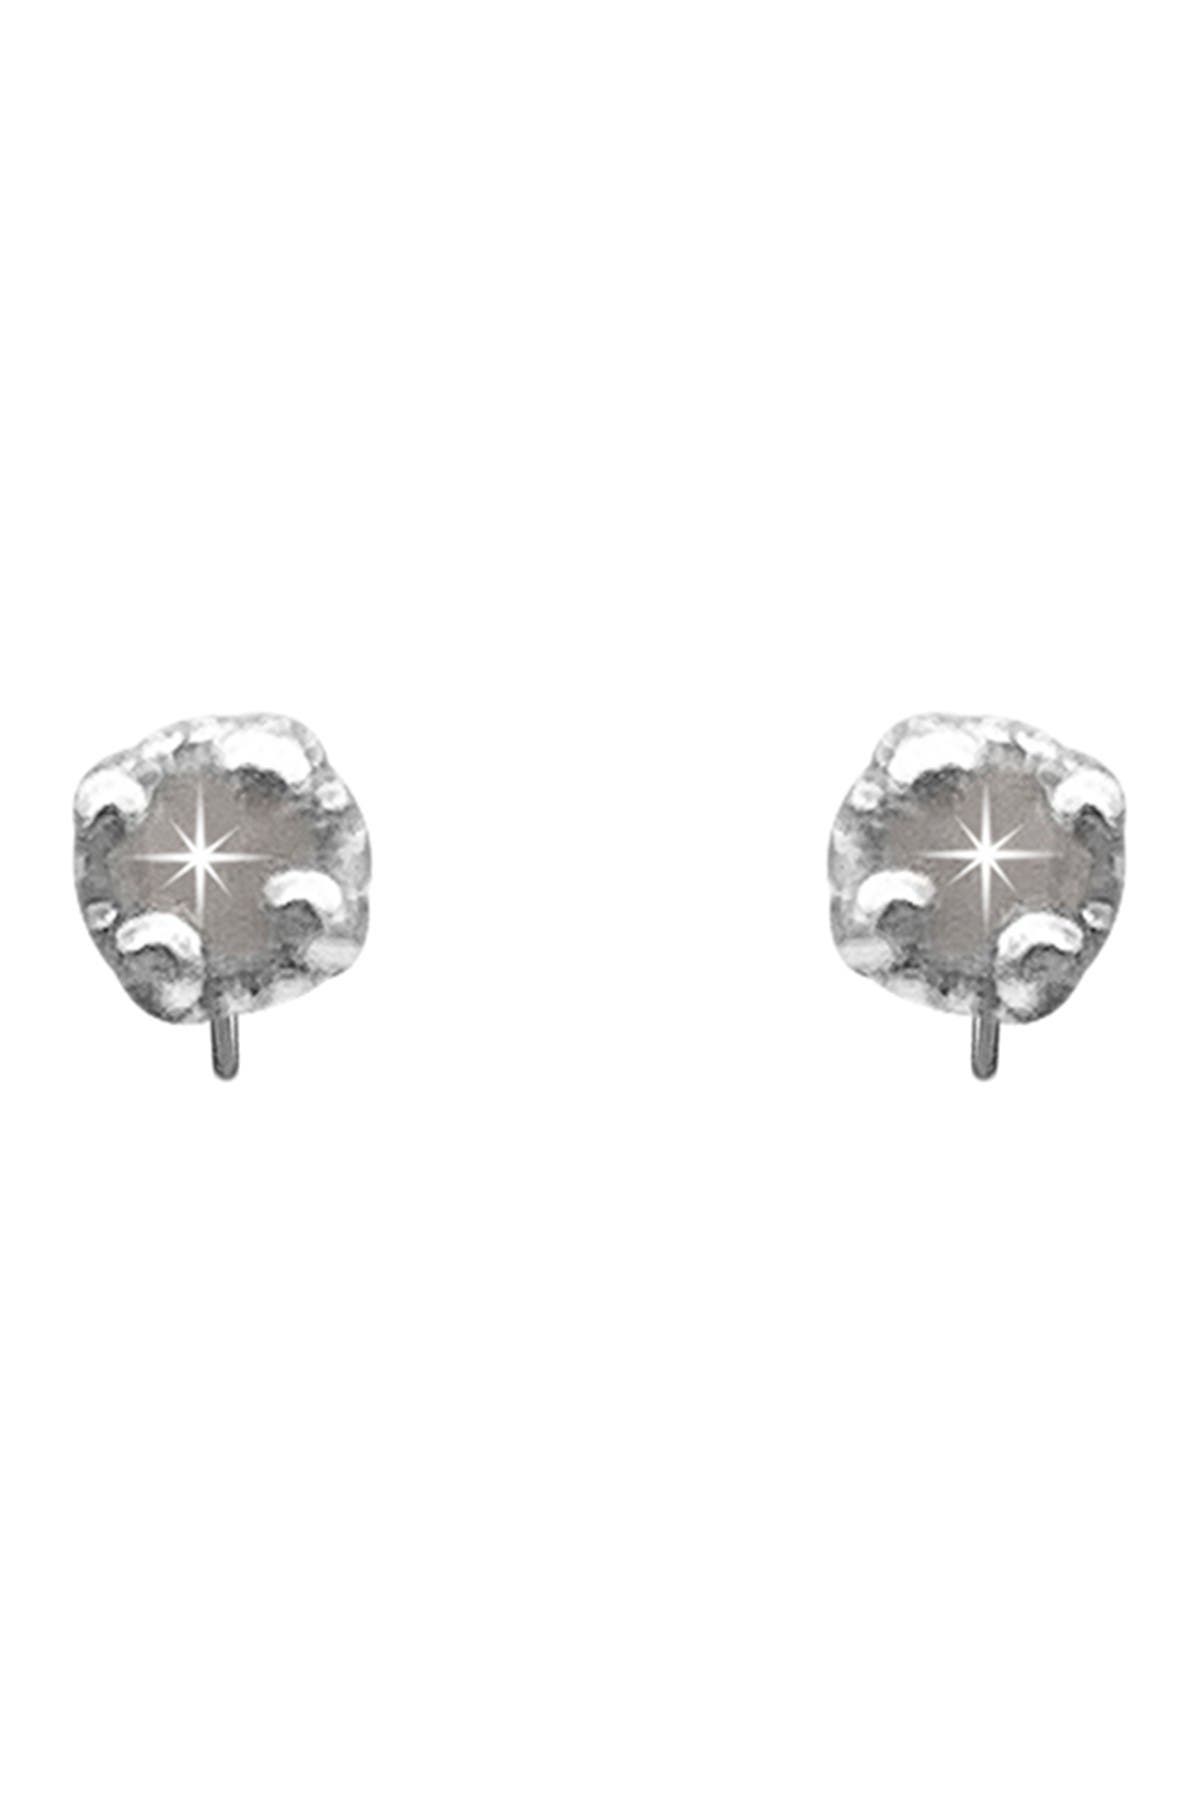 Adornia Fine White Rhodium Plated Sterling Silver Diamond Stud Earrings